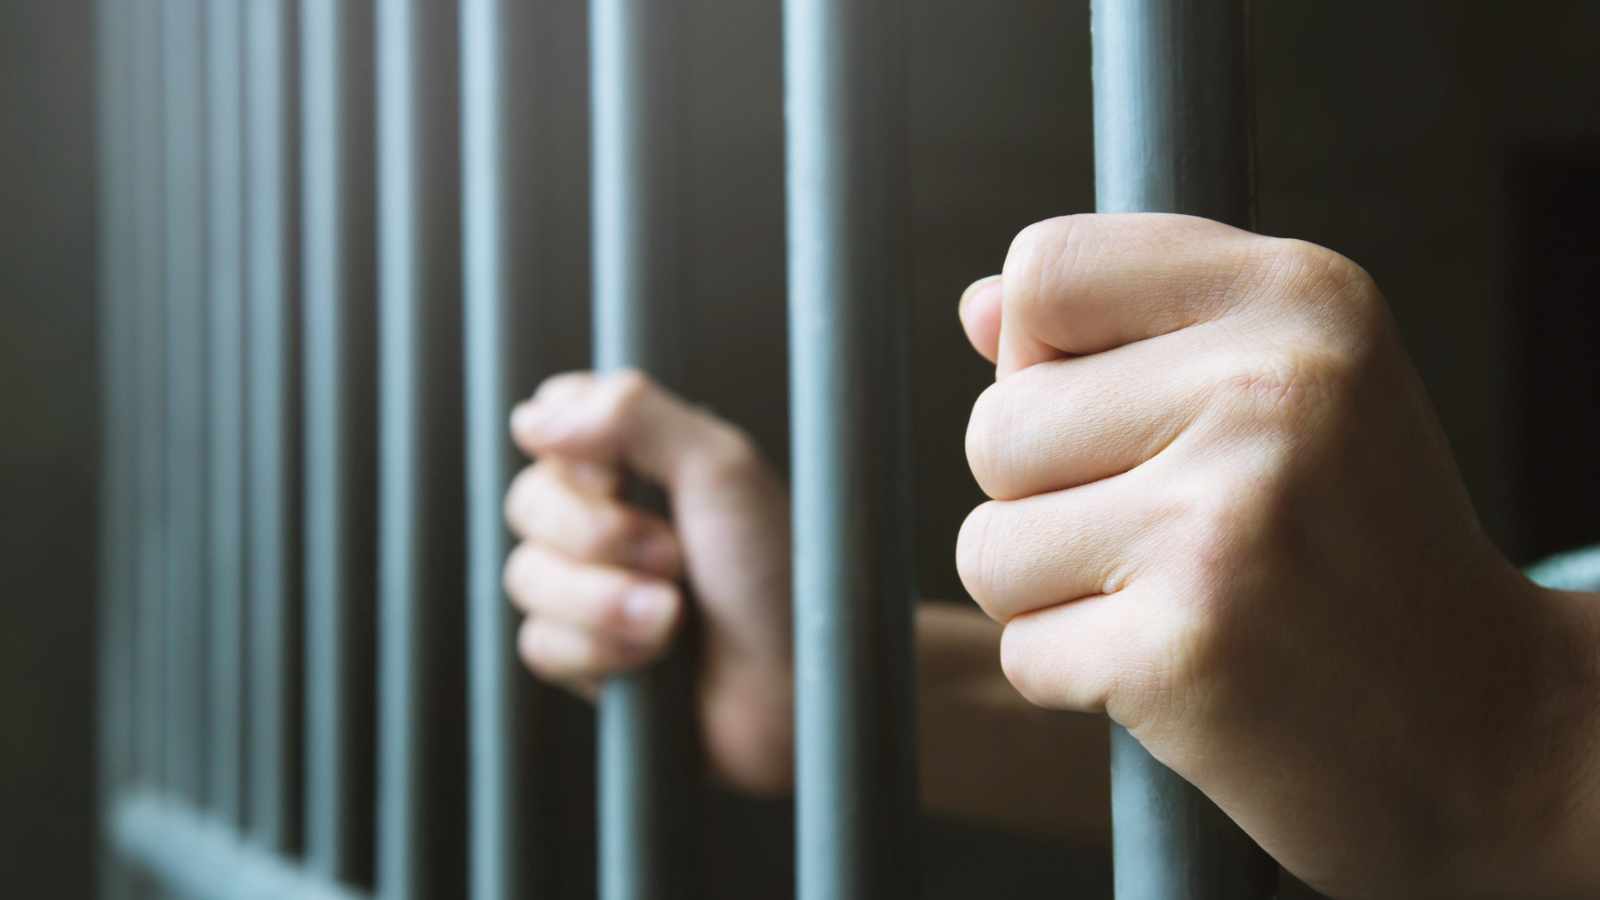 Man behind bars - hands holding prison bars